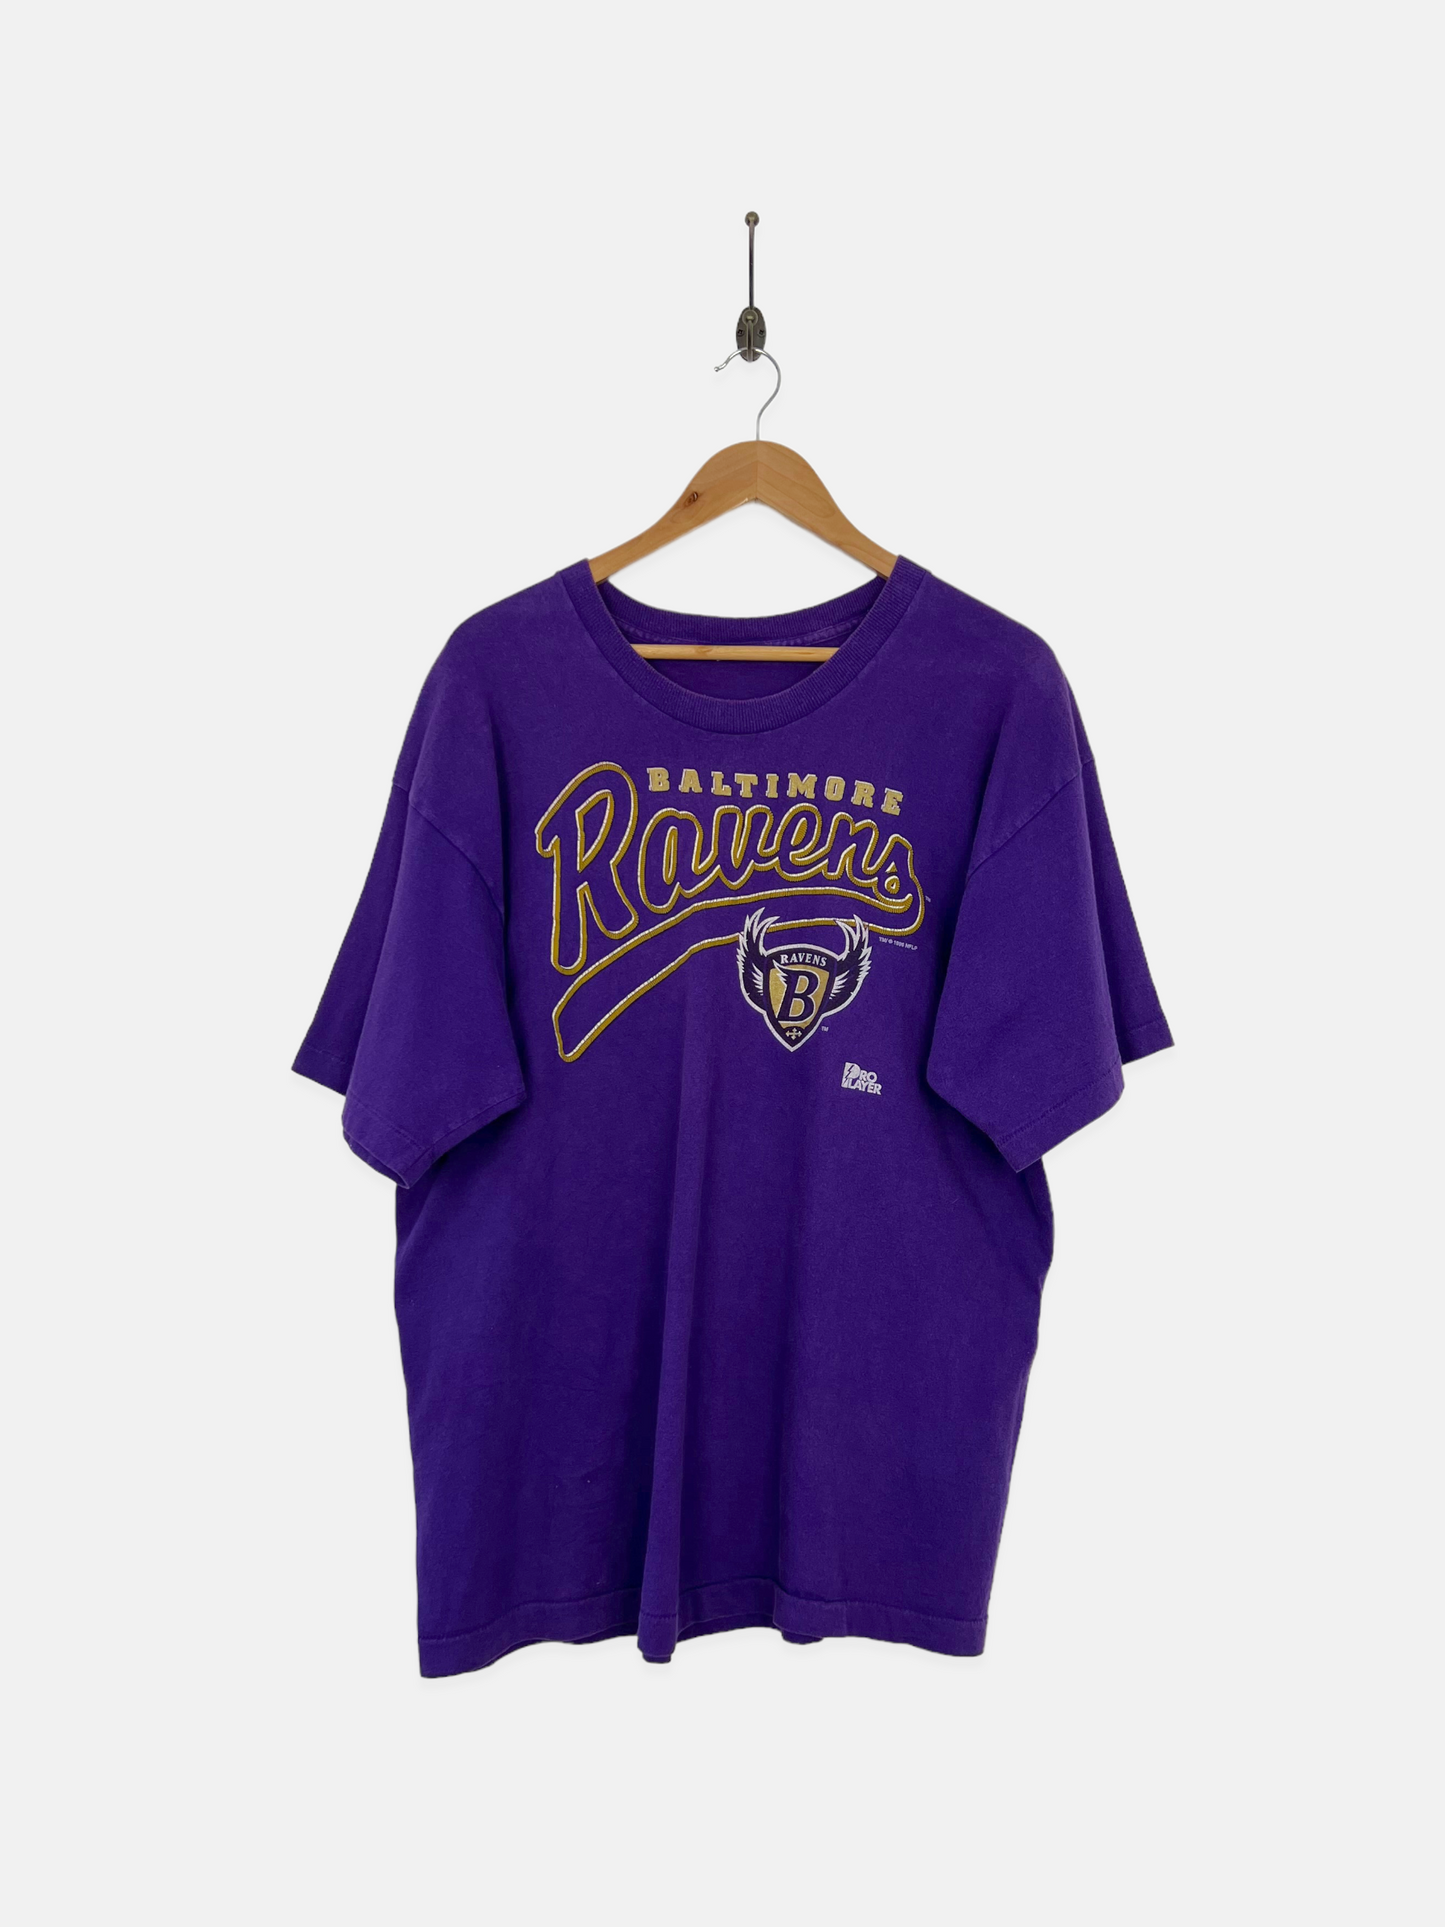 1996 Baltimore Ravens NFL Vintage T-Shirt Size XL